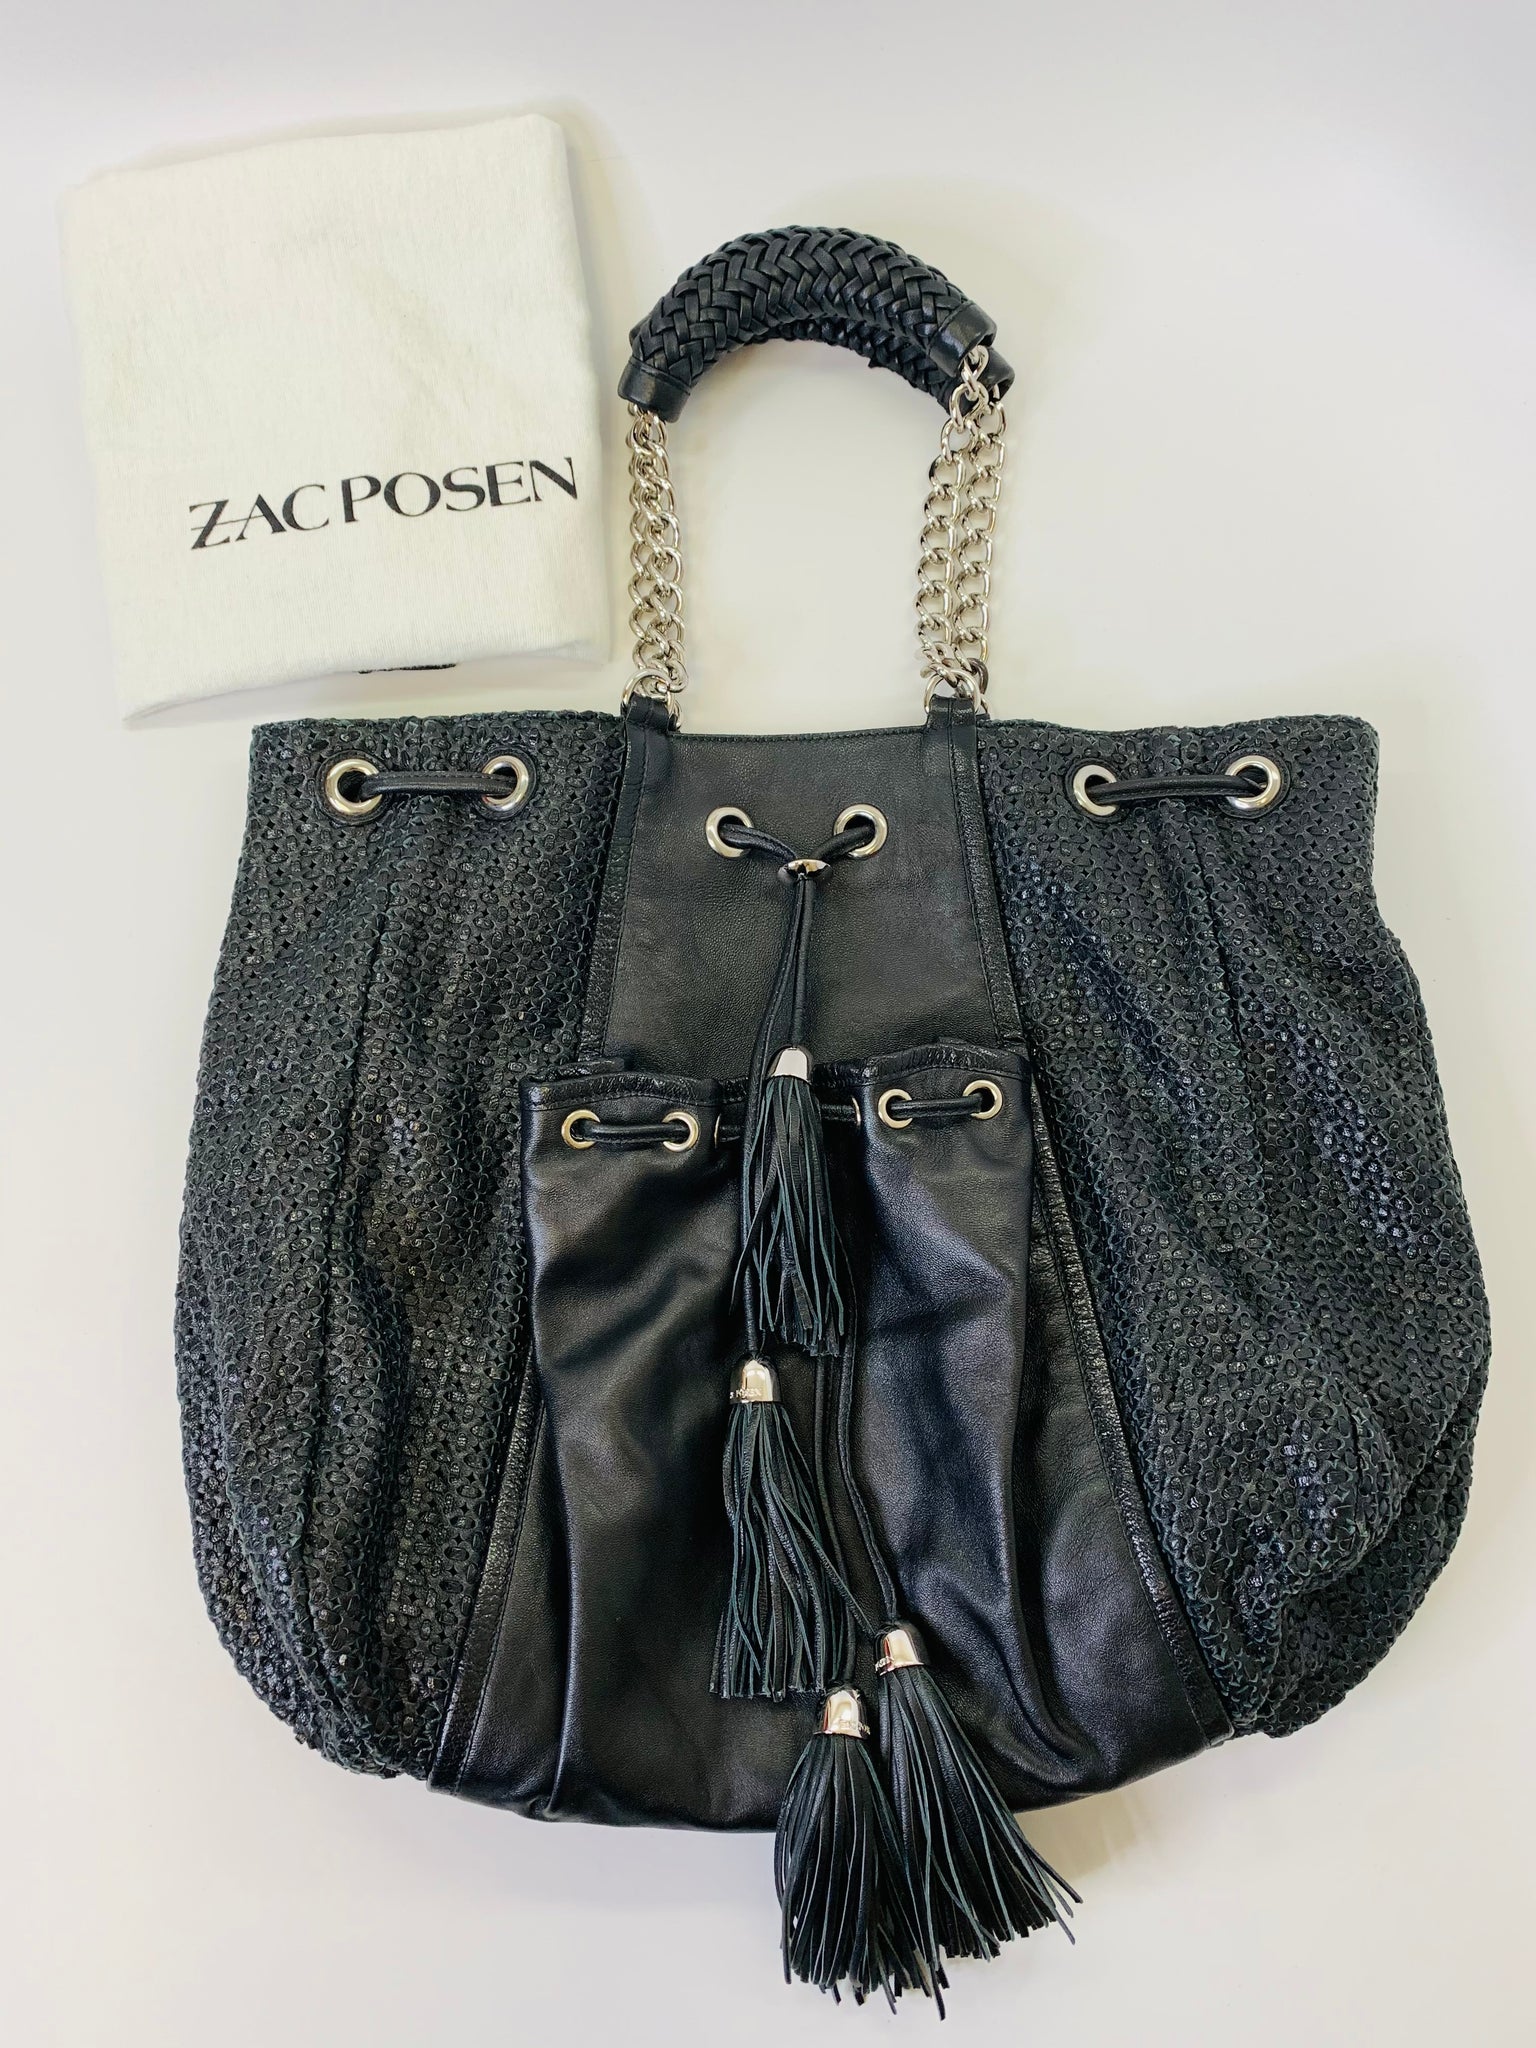 ZAC POSEN Large Shirley Bow Black Leather Tote Bag Sachel Purse Read Details